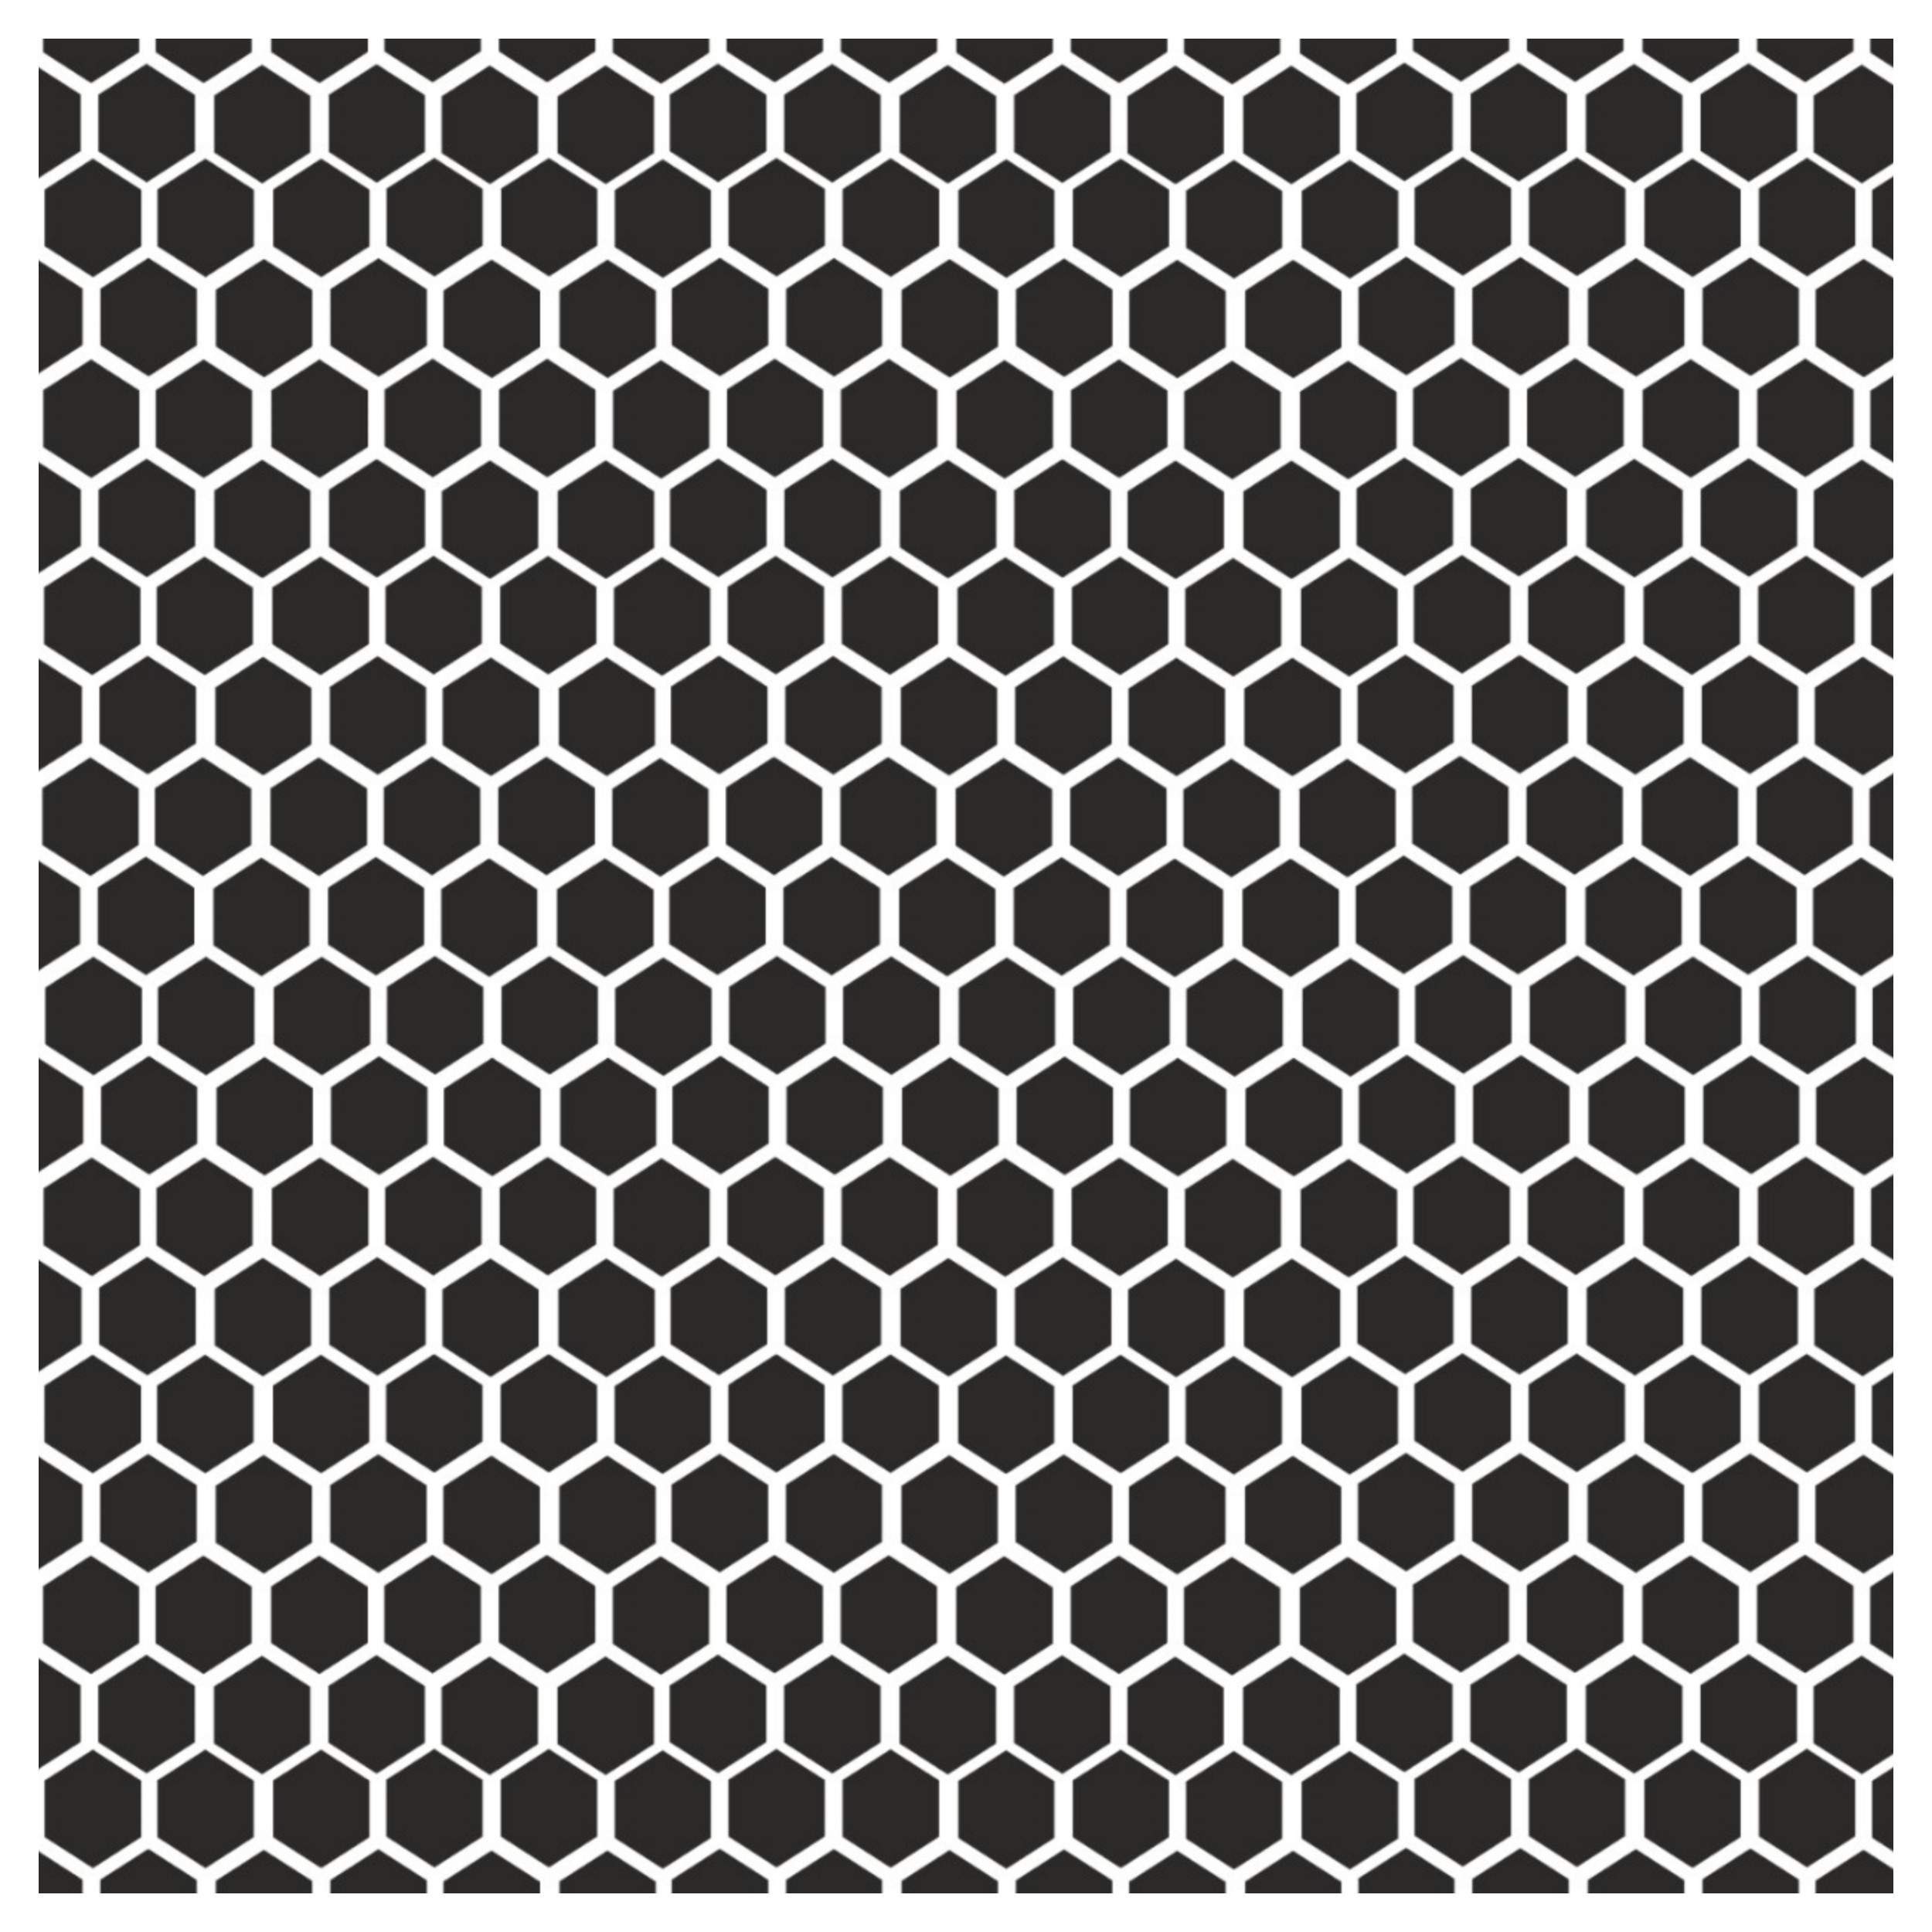 Honeycomb Stencil Waben Muster Airbrush Schablone